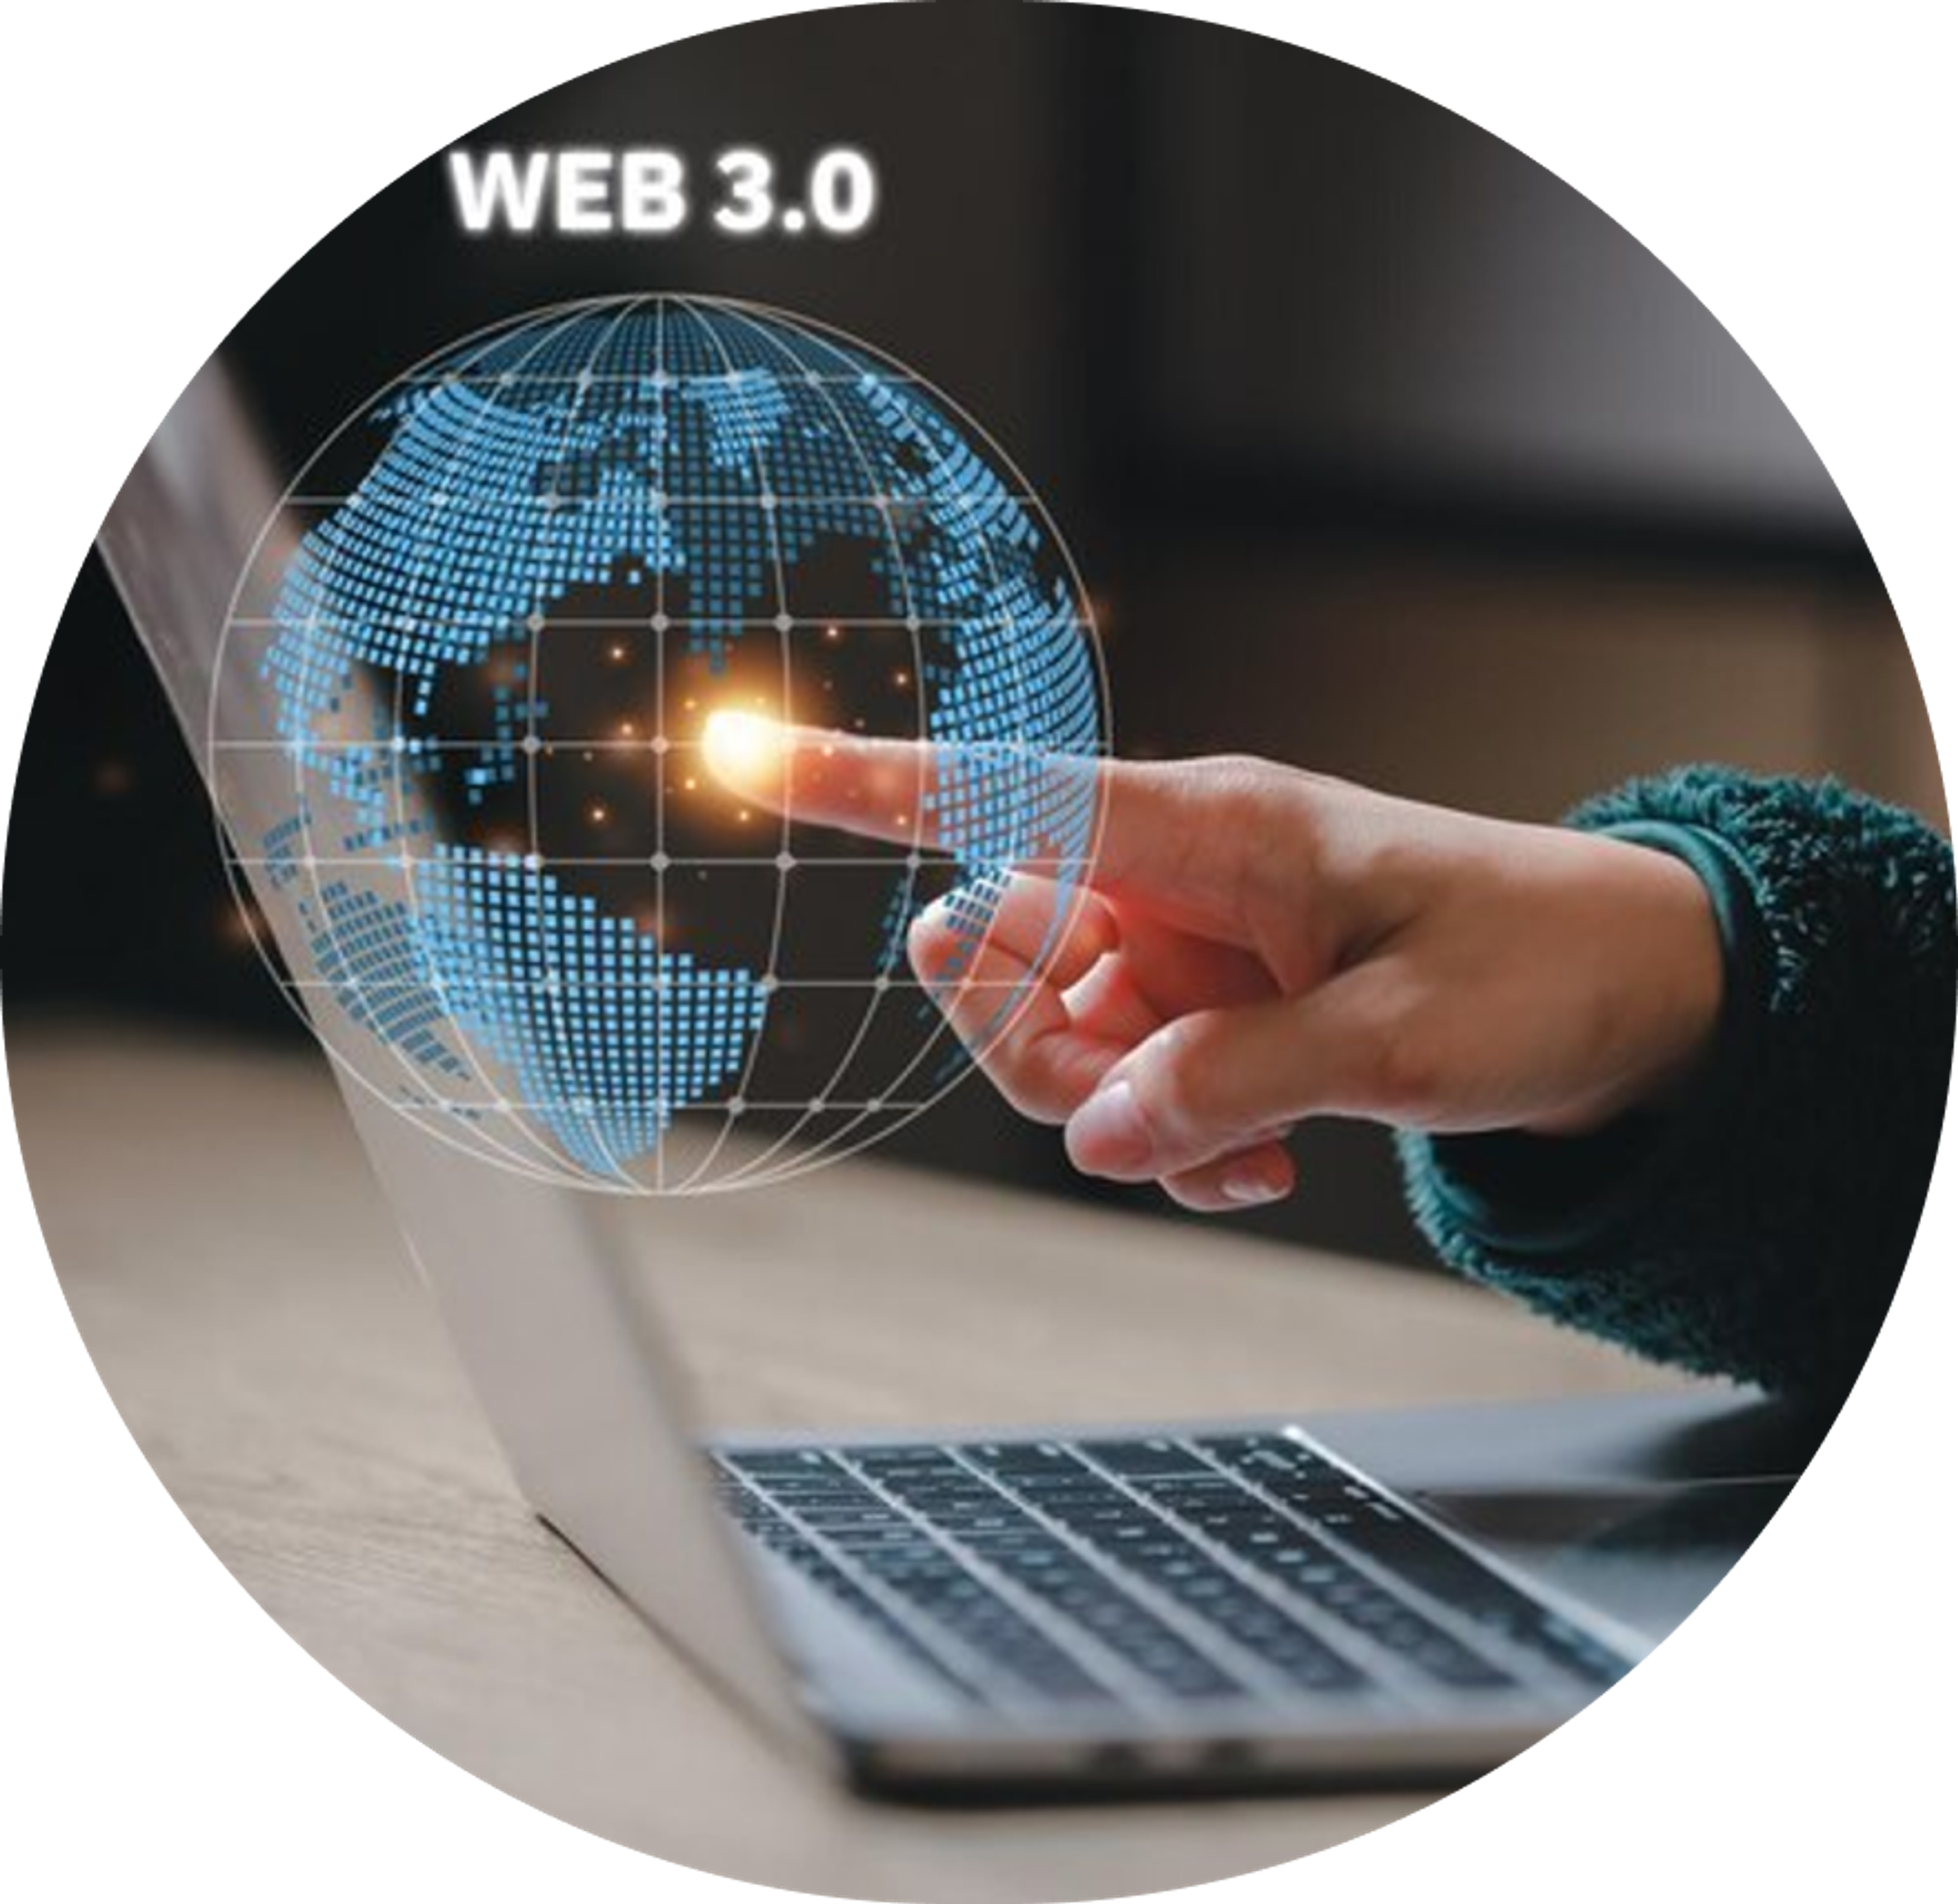 Steering Through The Promising Web 3.0